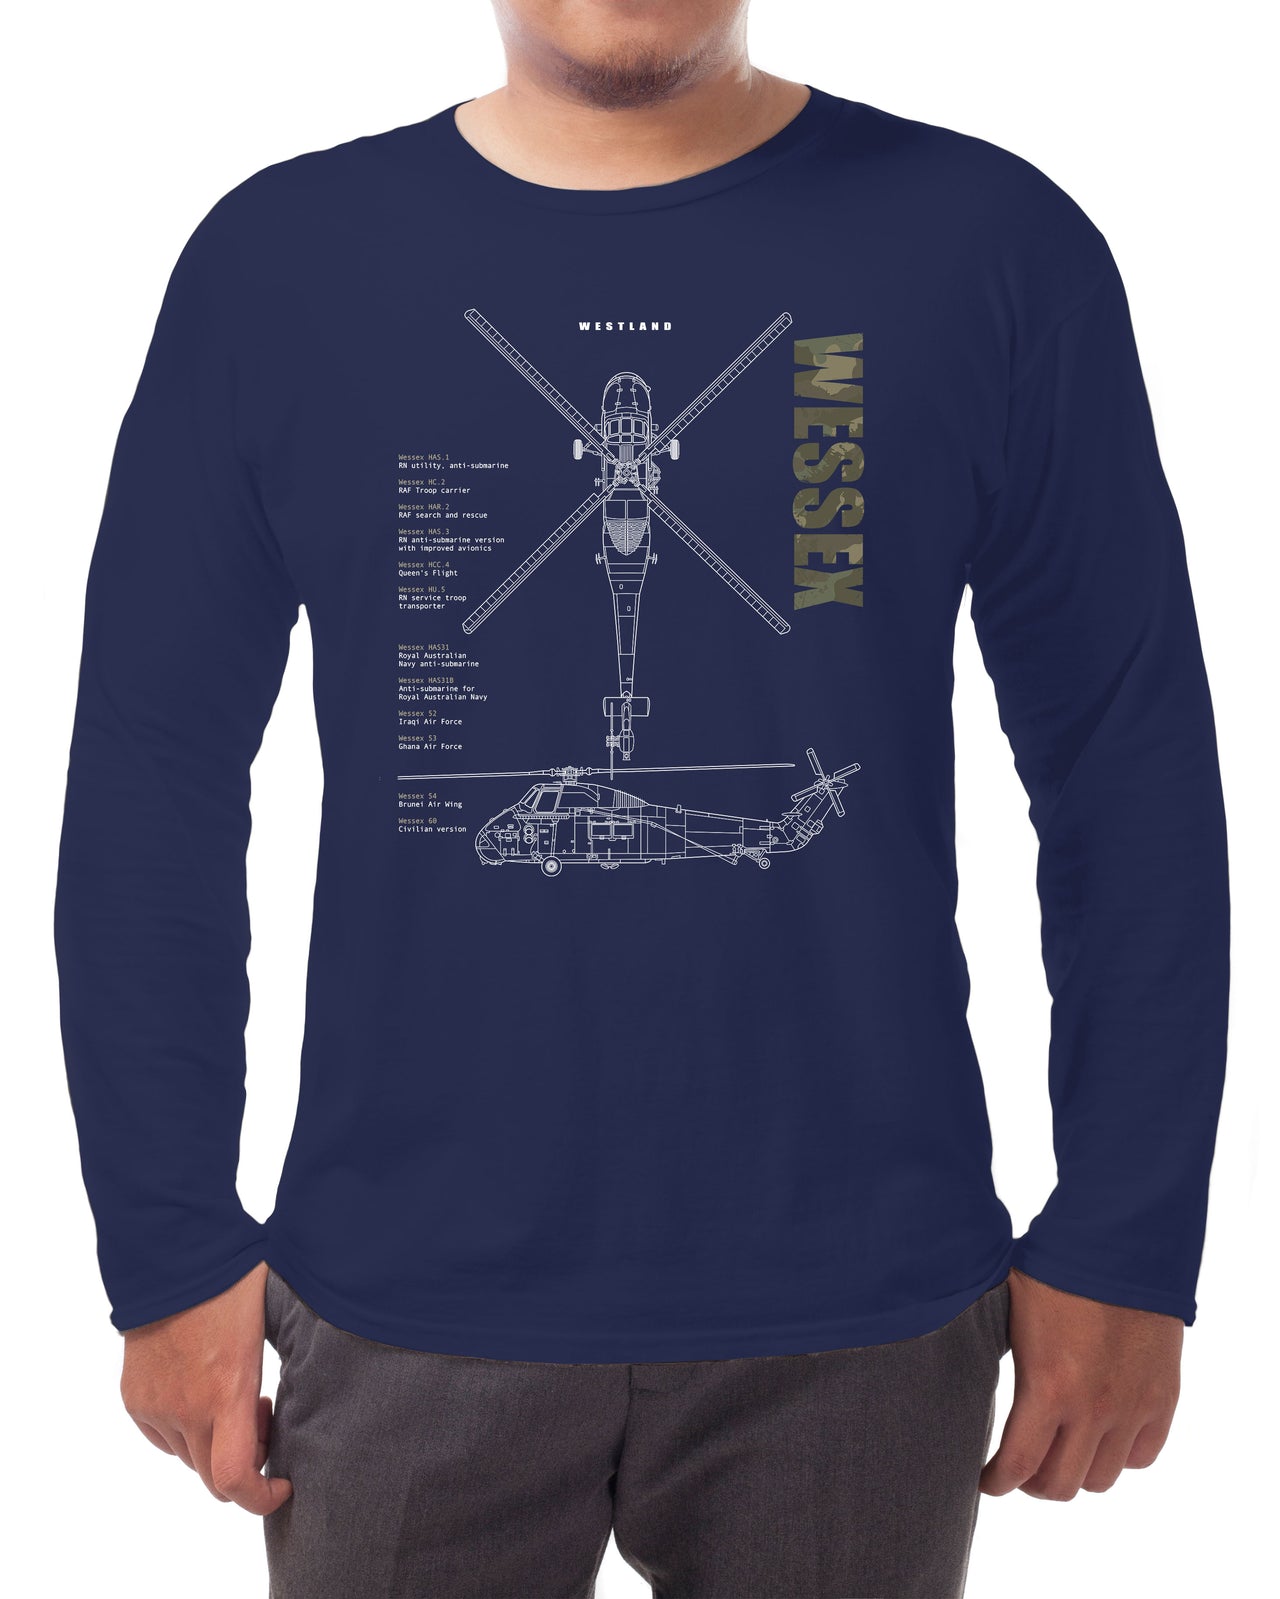 Wessex - Long-sleeve T-shirt